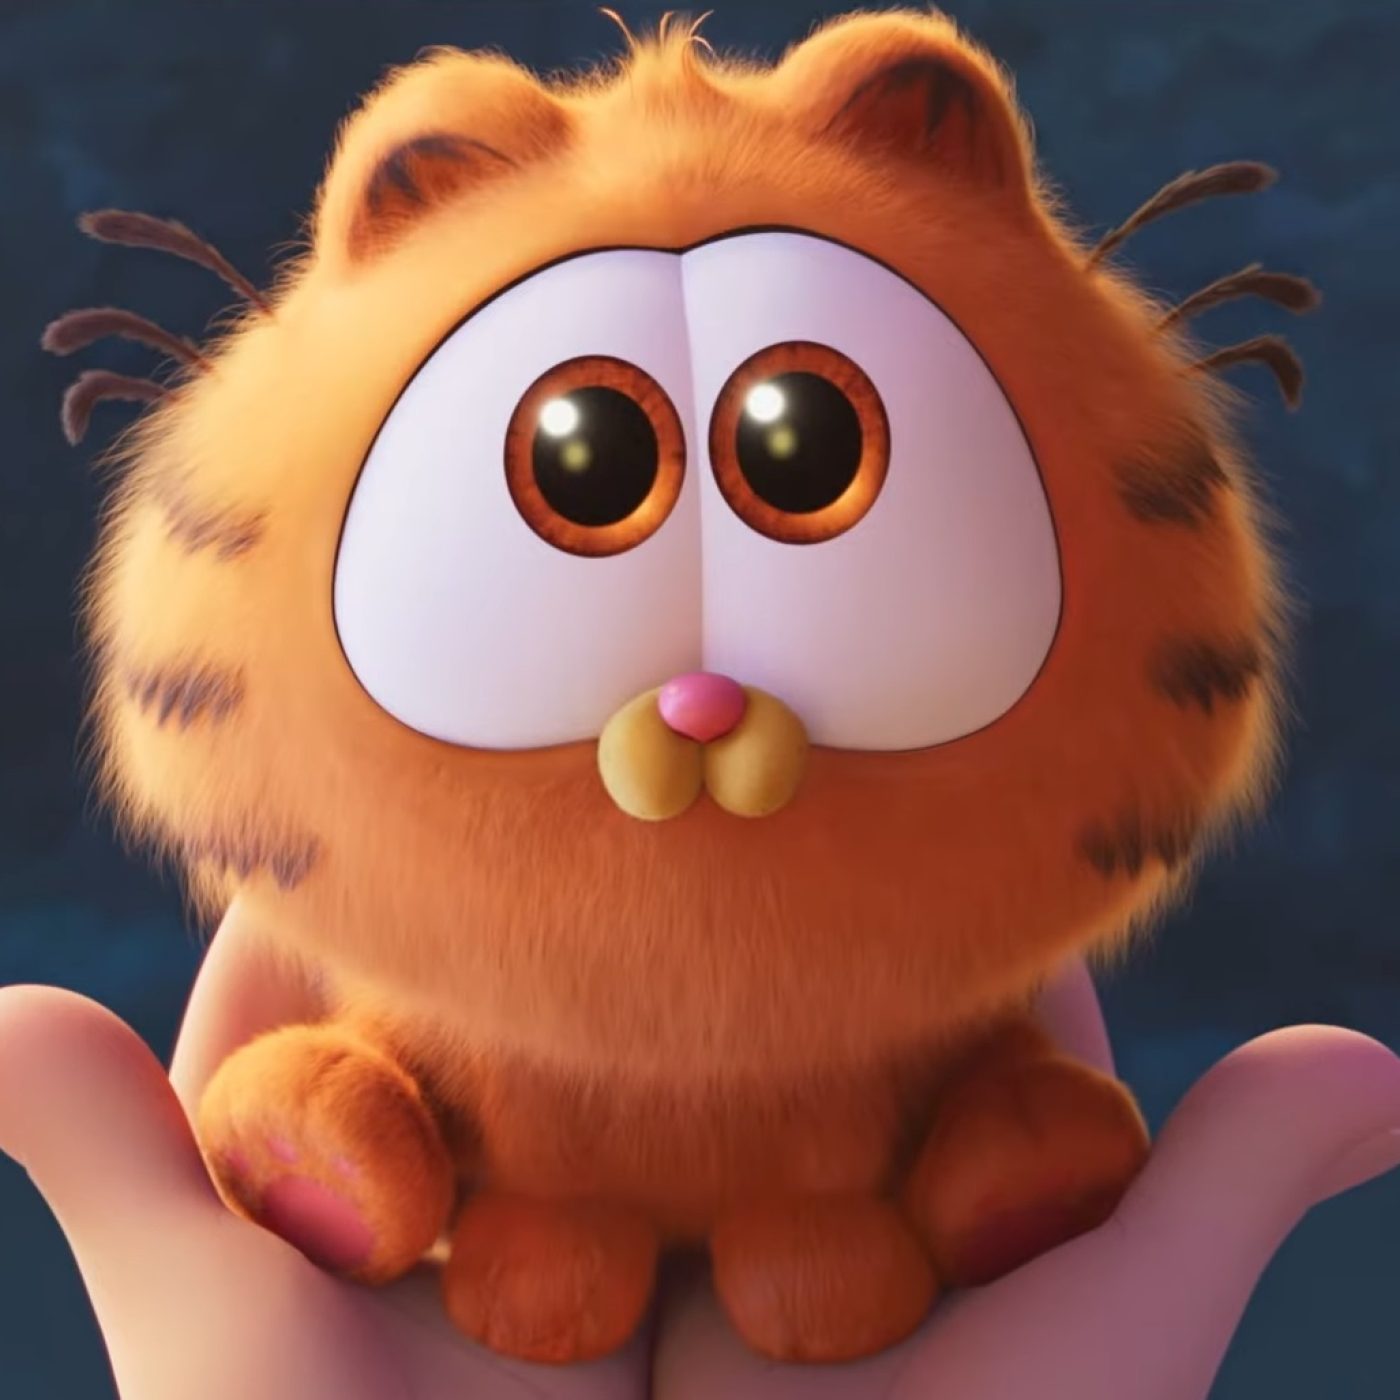 Garfield: Chris Pratt Movie Release Date Set for 2024 – The